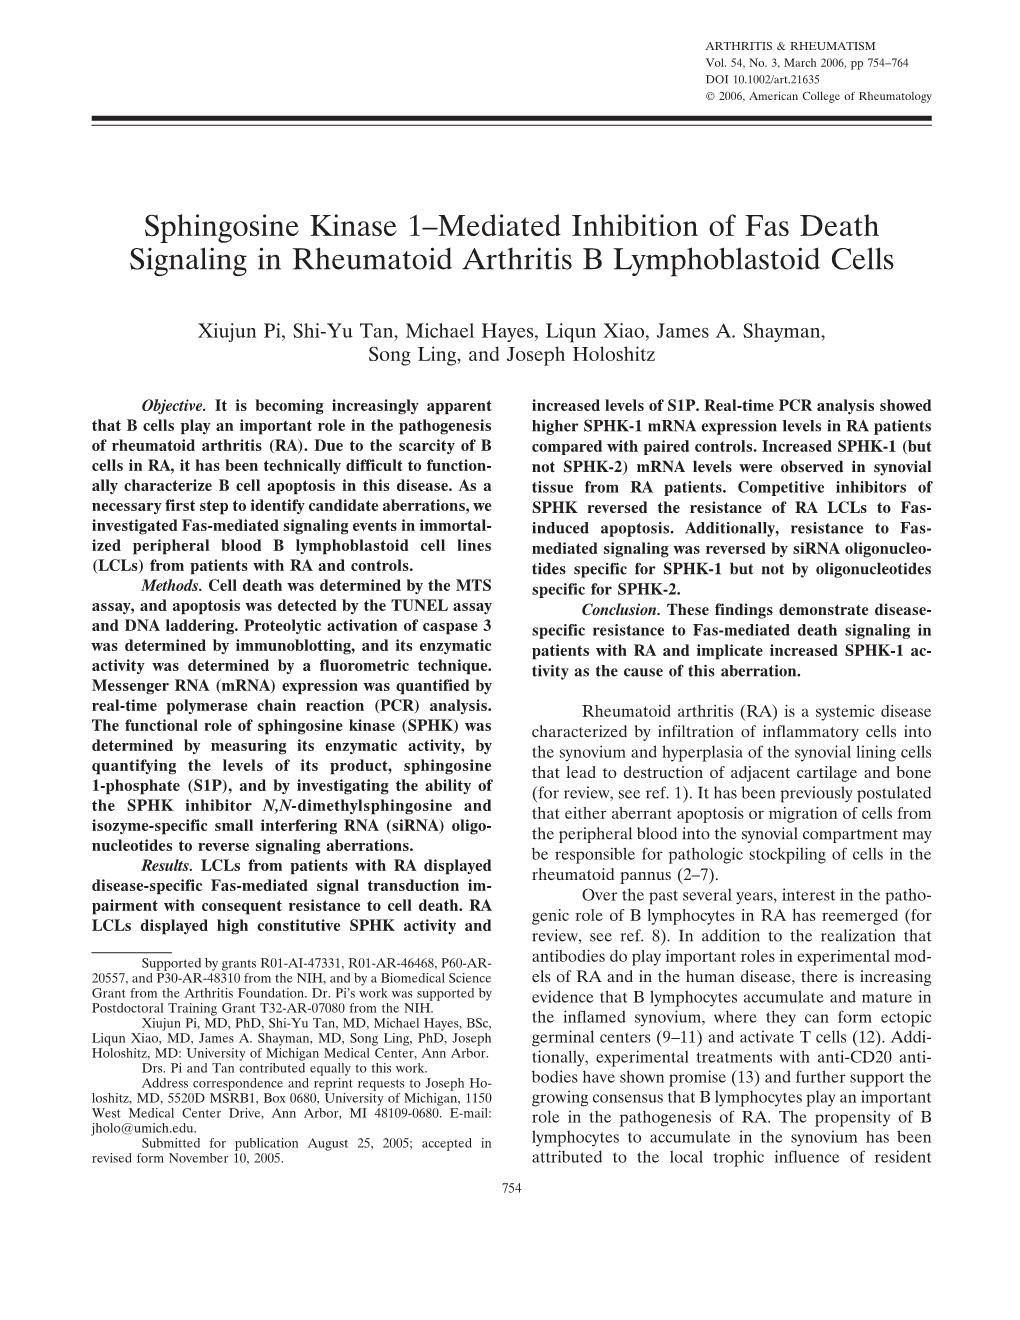 Sphingosine Kinase 1–Mediated Inhibition of Fas Death Signaling in Rheumatoid Arthritis B Lymphoblastoid Cells